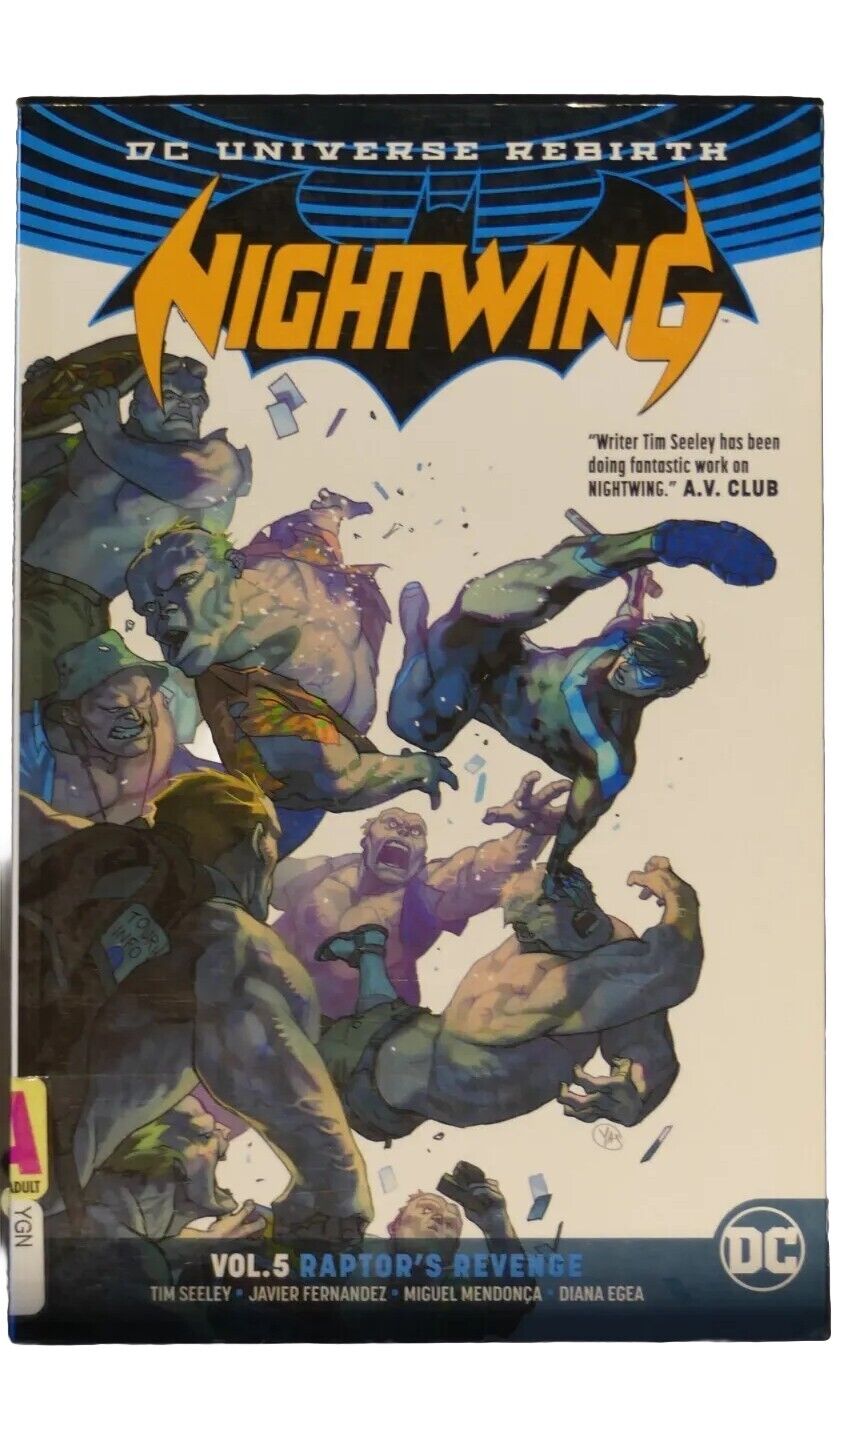 Nightwing #5 Raptors Revenge, DC Comics, June 2018